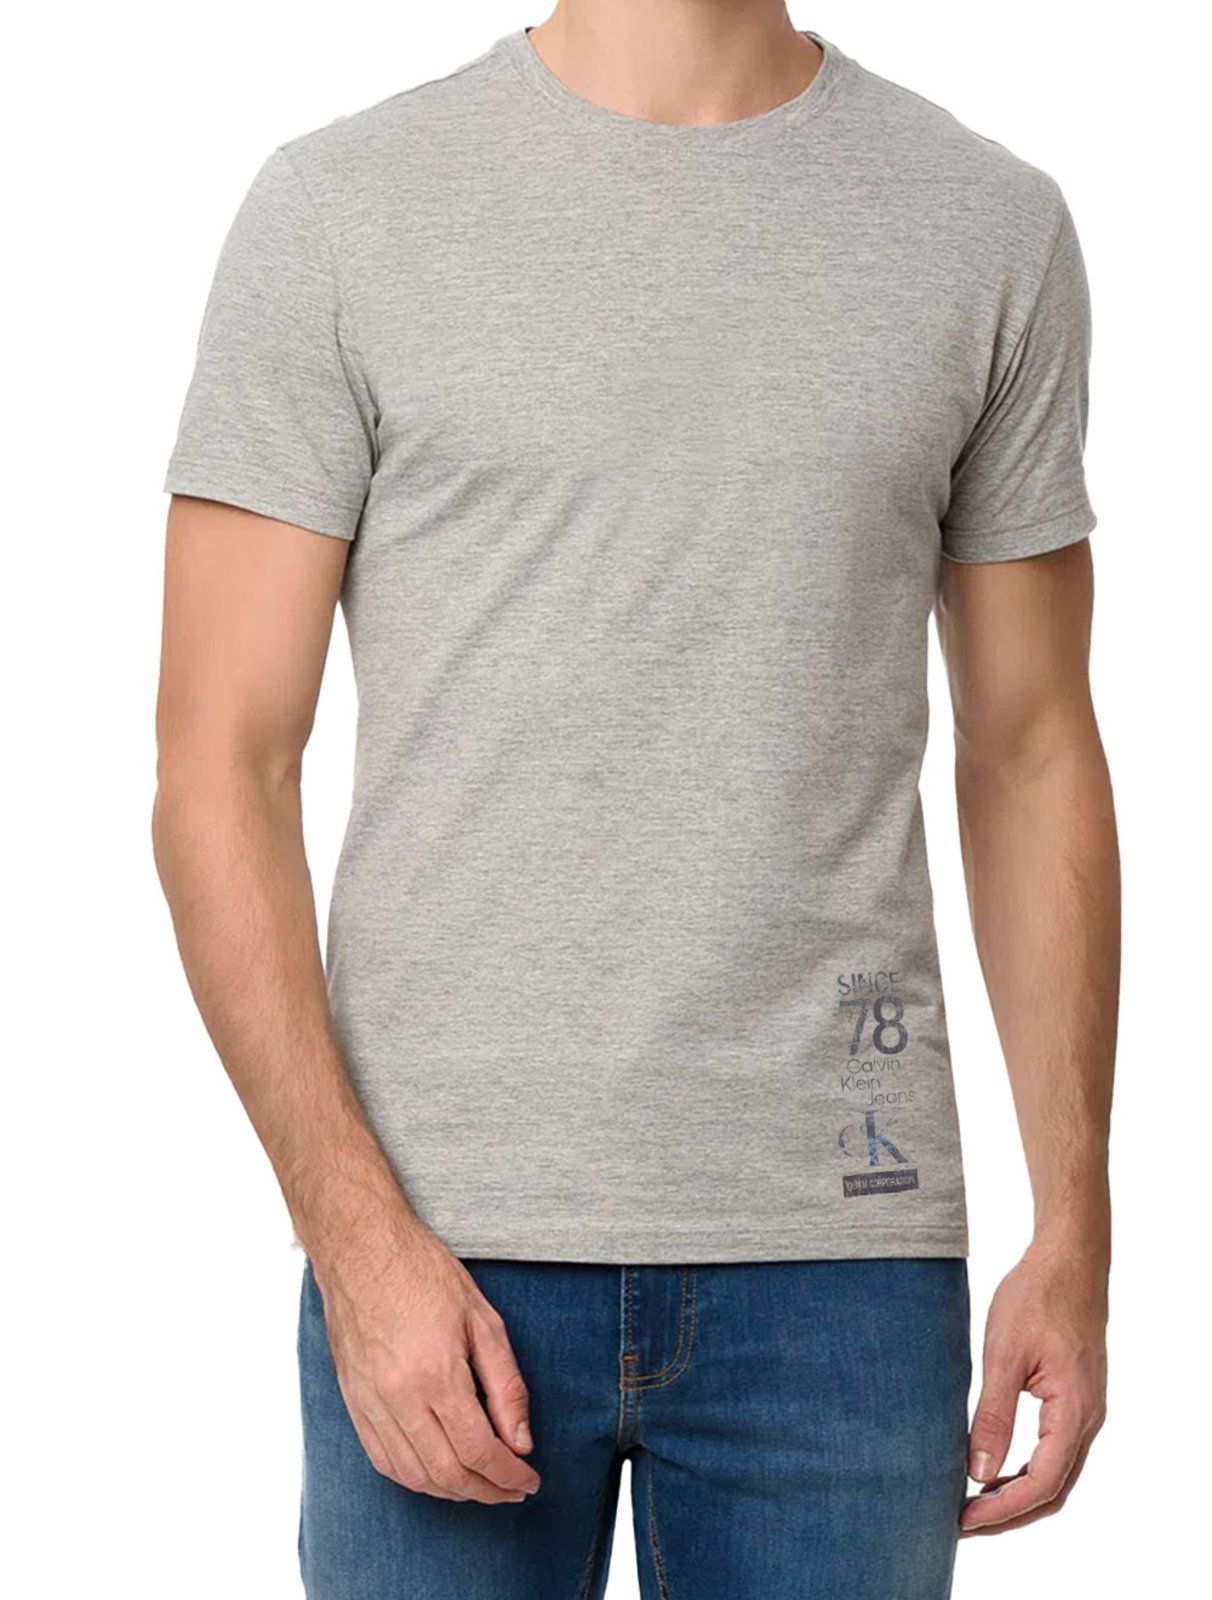 Camiseta Calvin Klein Jeans Masculina Institutional New Logo Preta